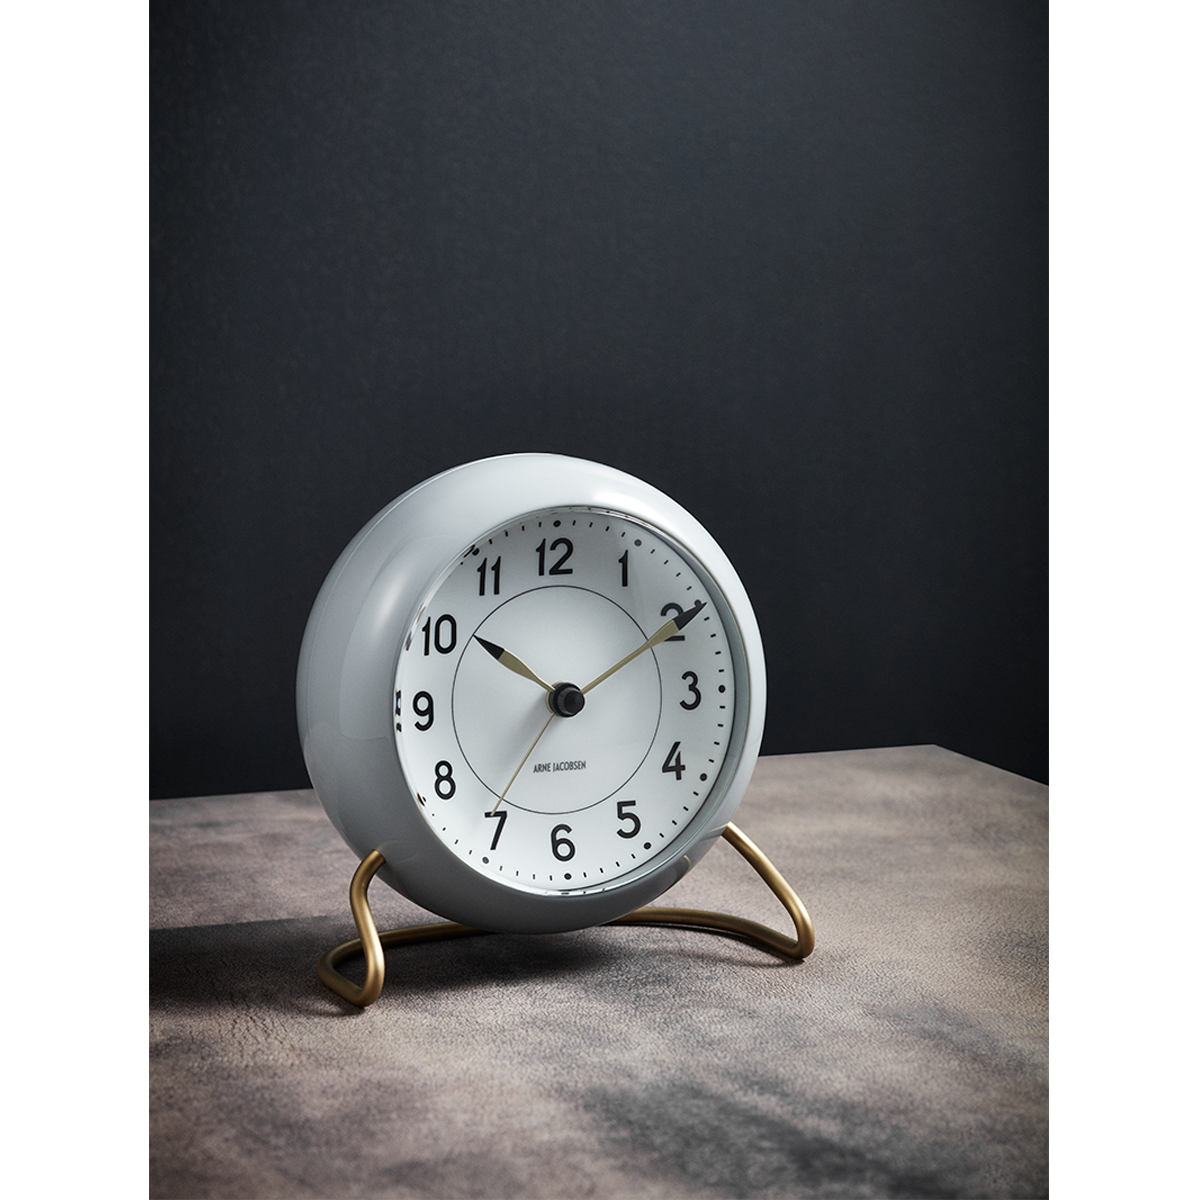 Arne Jacobsen Station Alarm Clock, Grey